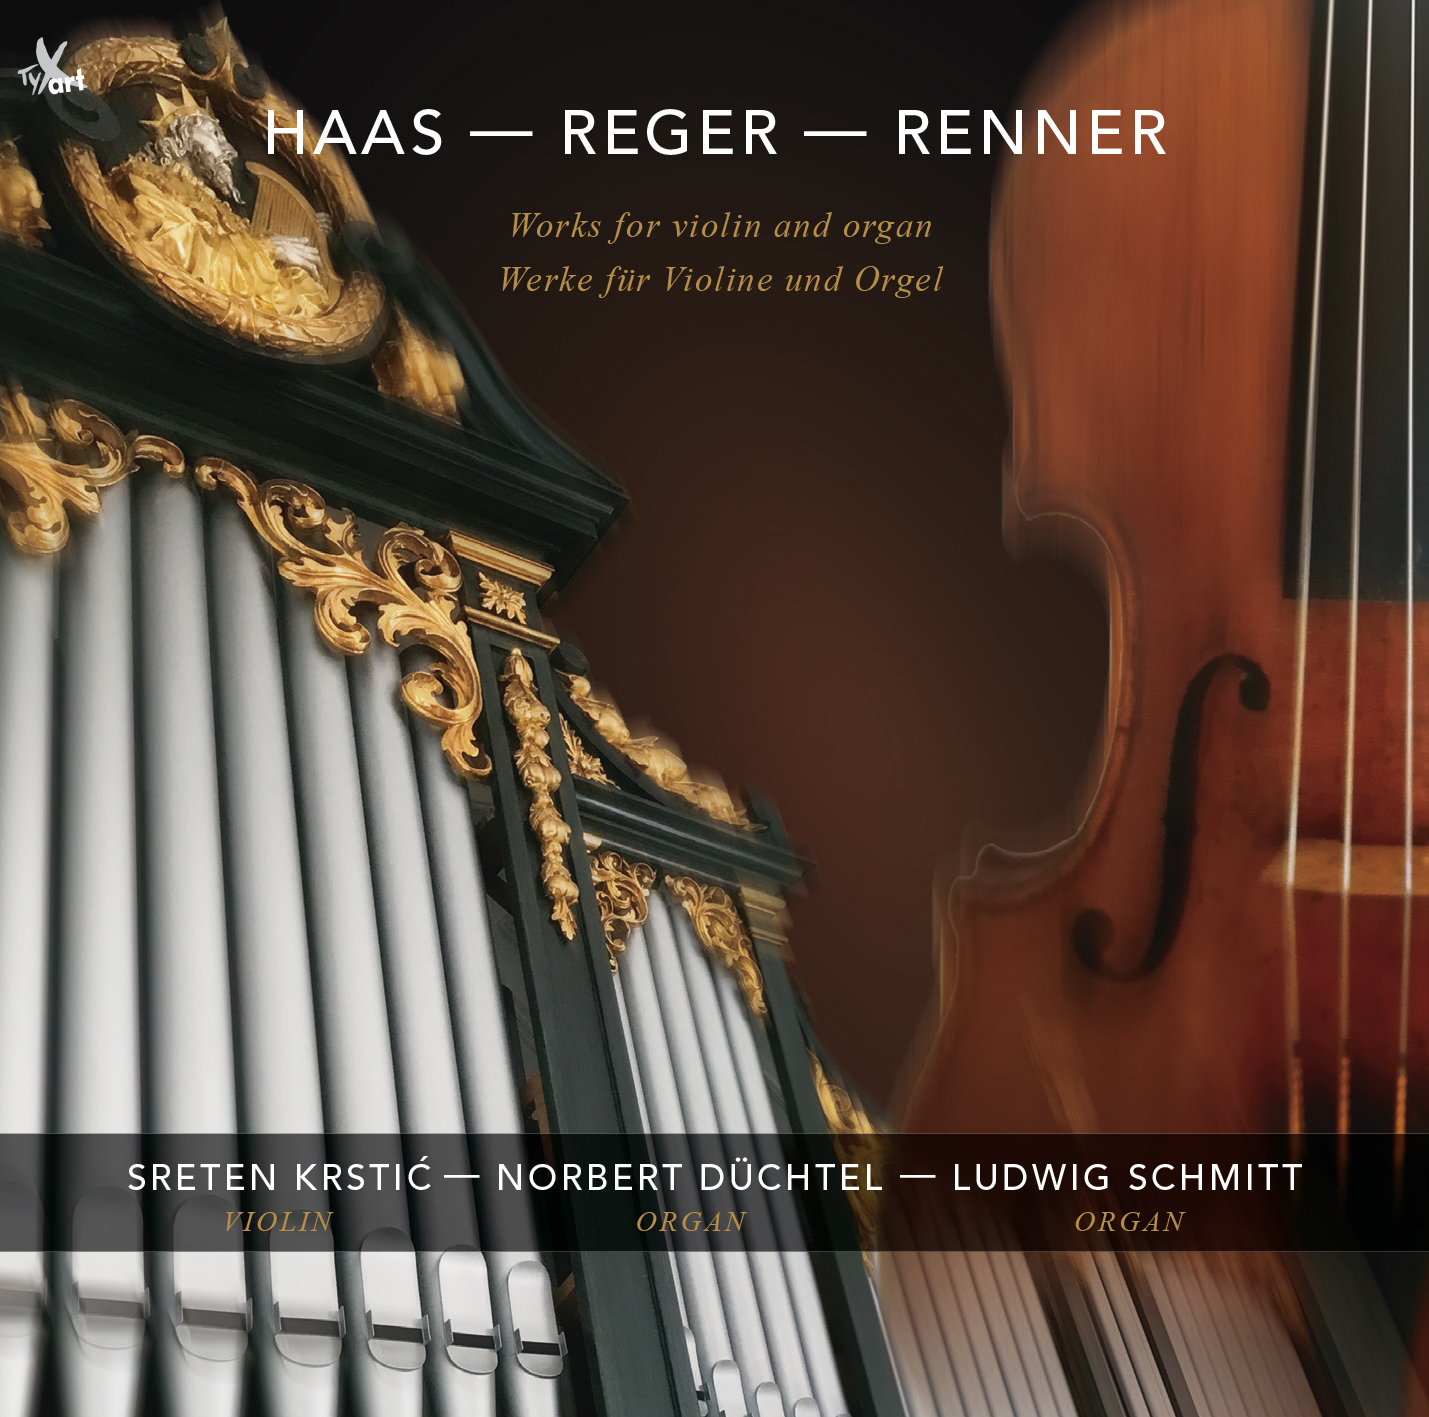 Haas, Reger, Renner: Works for Violin and Organ - Krstič, Düchtel, Schmitt